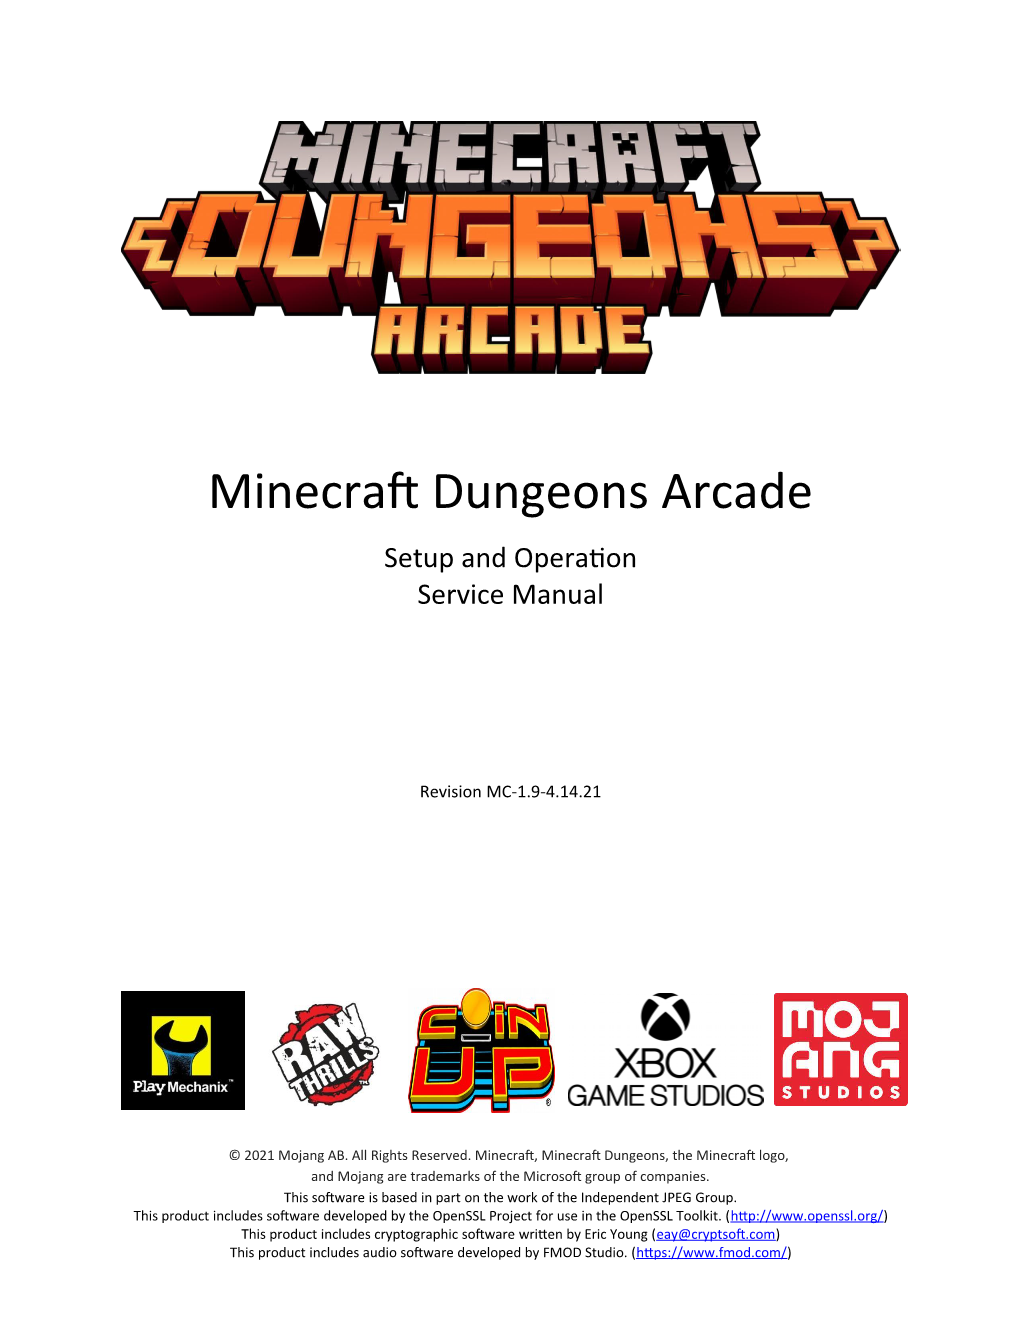 Minecraft Dungeons Arcade Setup and Operaton Service Manual